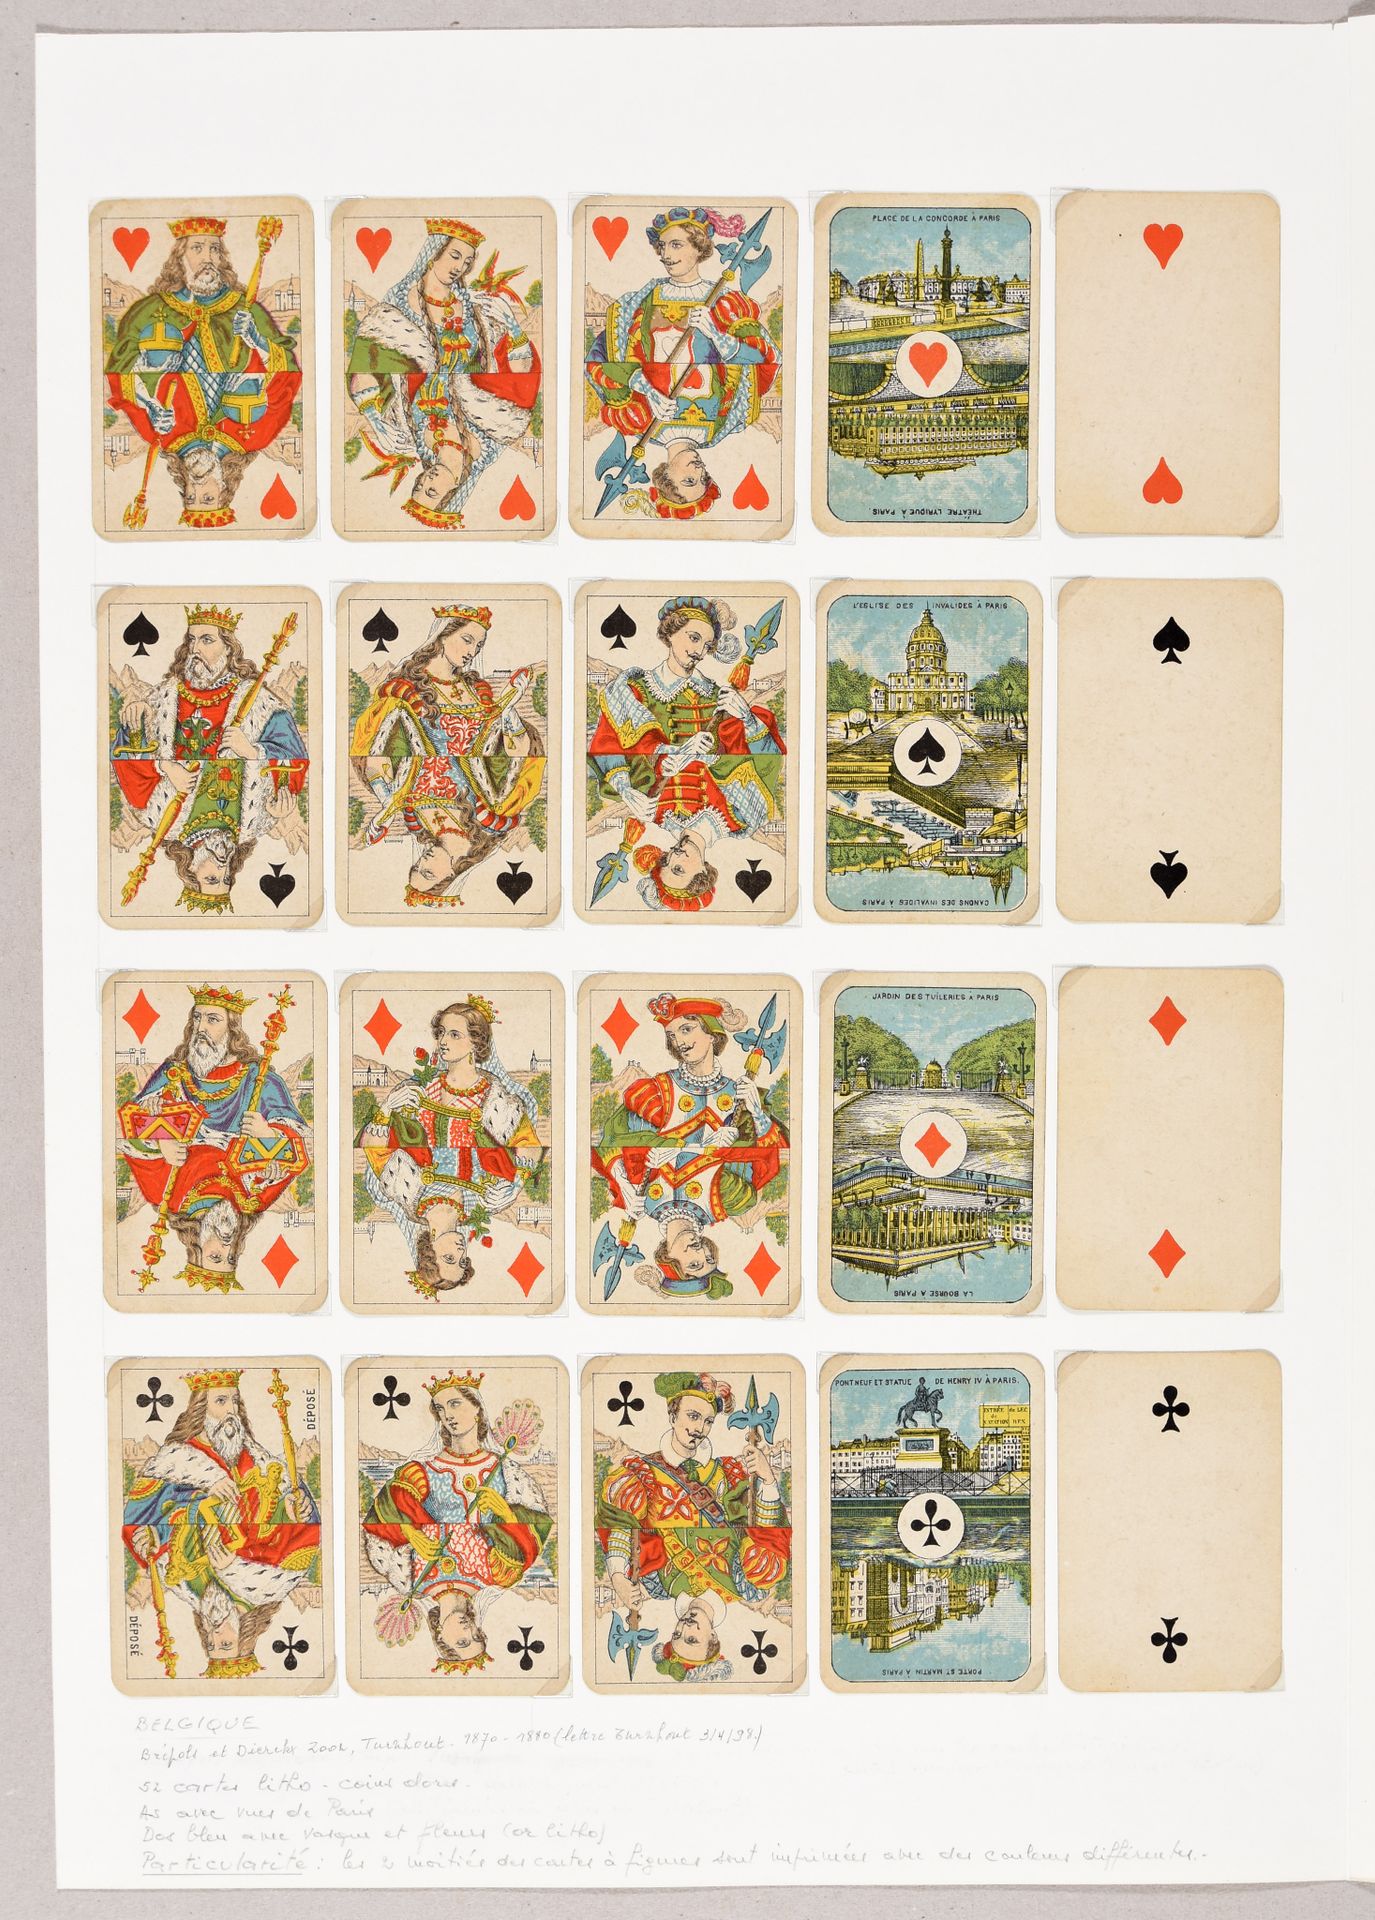 Null 2套可以看到巴黎的景色。Turhnout 约1870-1880 双头，彩色石版画，9,1 x 6,1厘米，圆角，52张。安装在支撑片上的照片角落里（有&hellip;